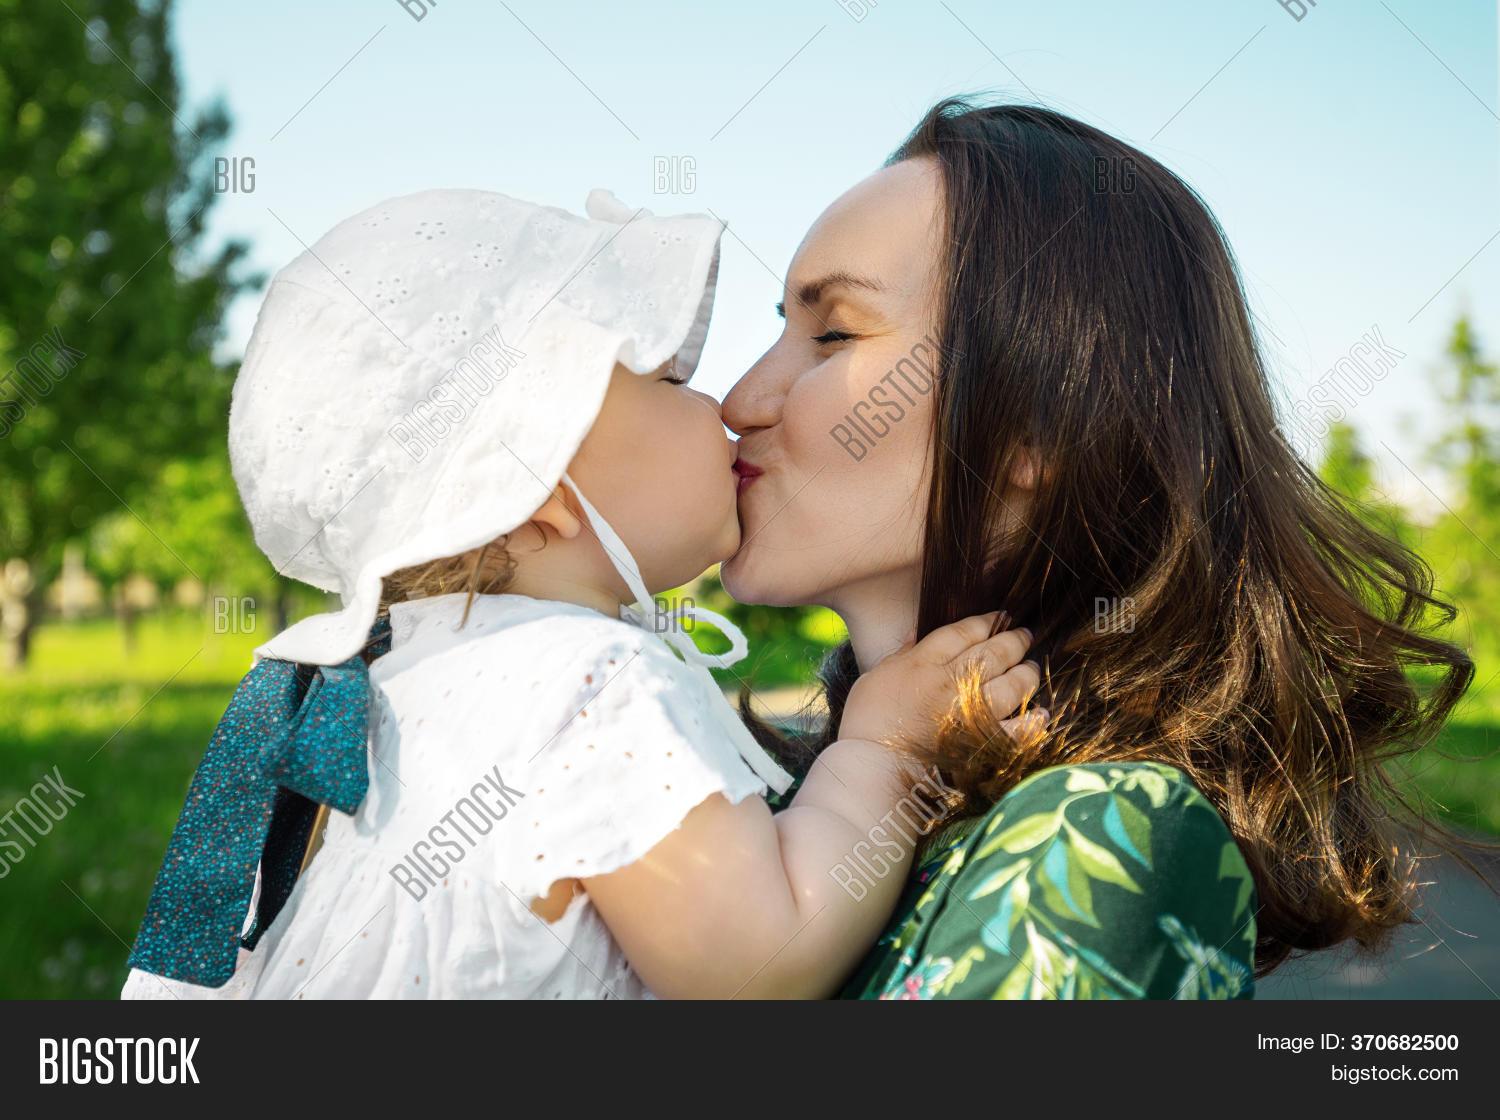 deepa venkatesh recommends moms kissing daughters pic